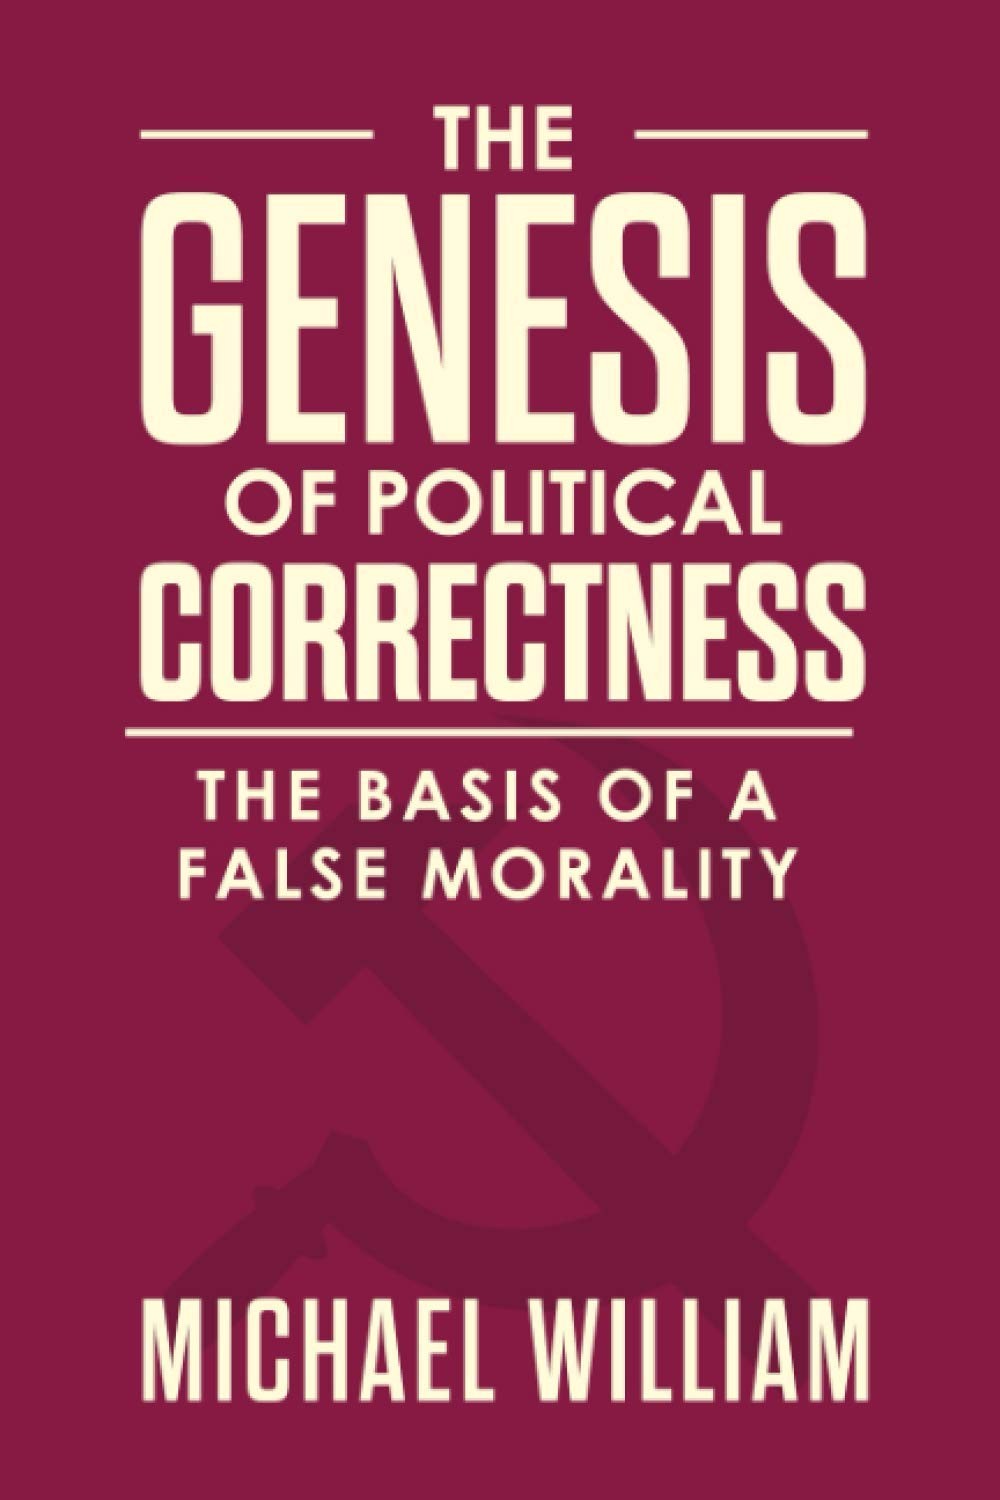 The Genesis of Political Correctness: The Basis of a False Morality